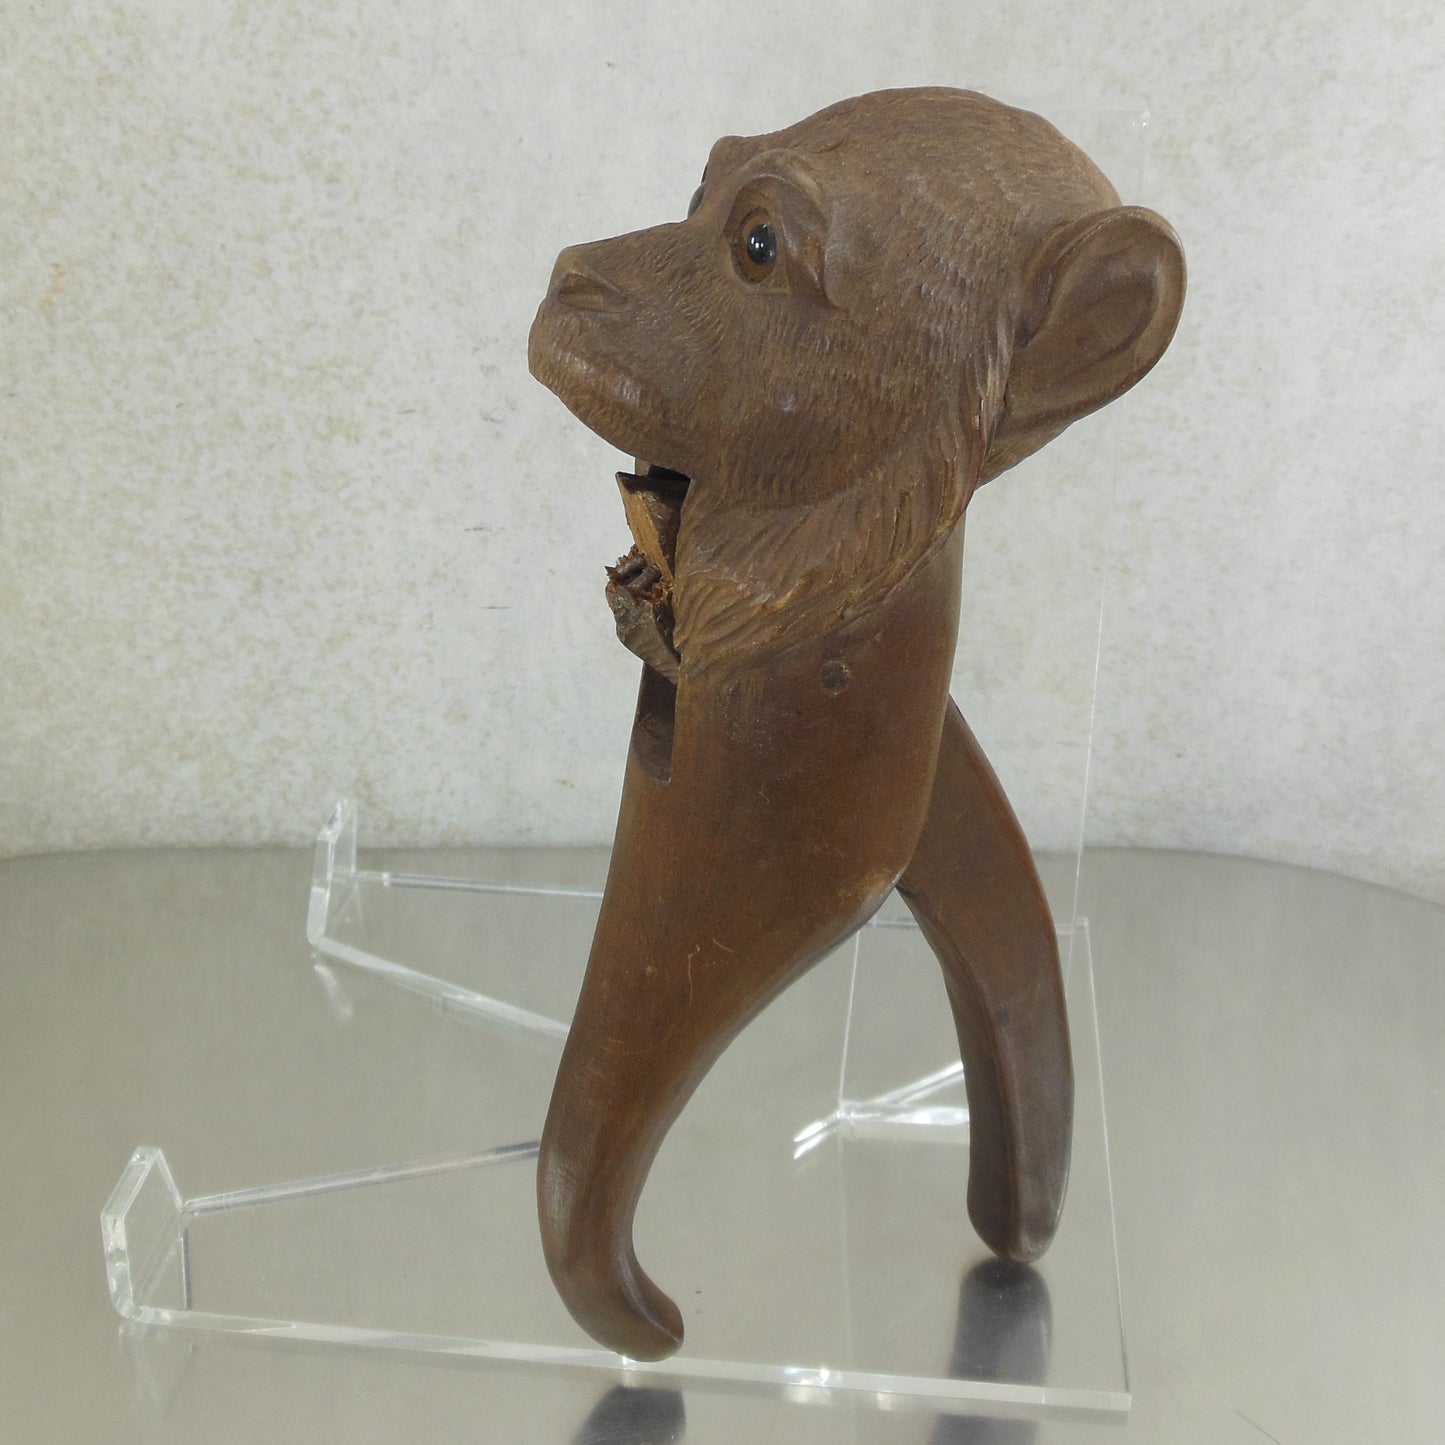 Antique Black Forest Carved Wood Monkey Nutcracker Glass Eyes - Repair Parts Borken Jaw